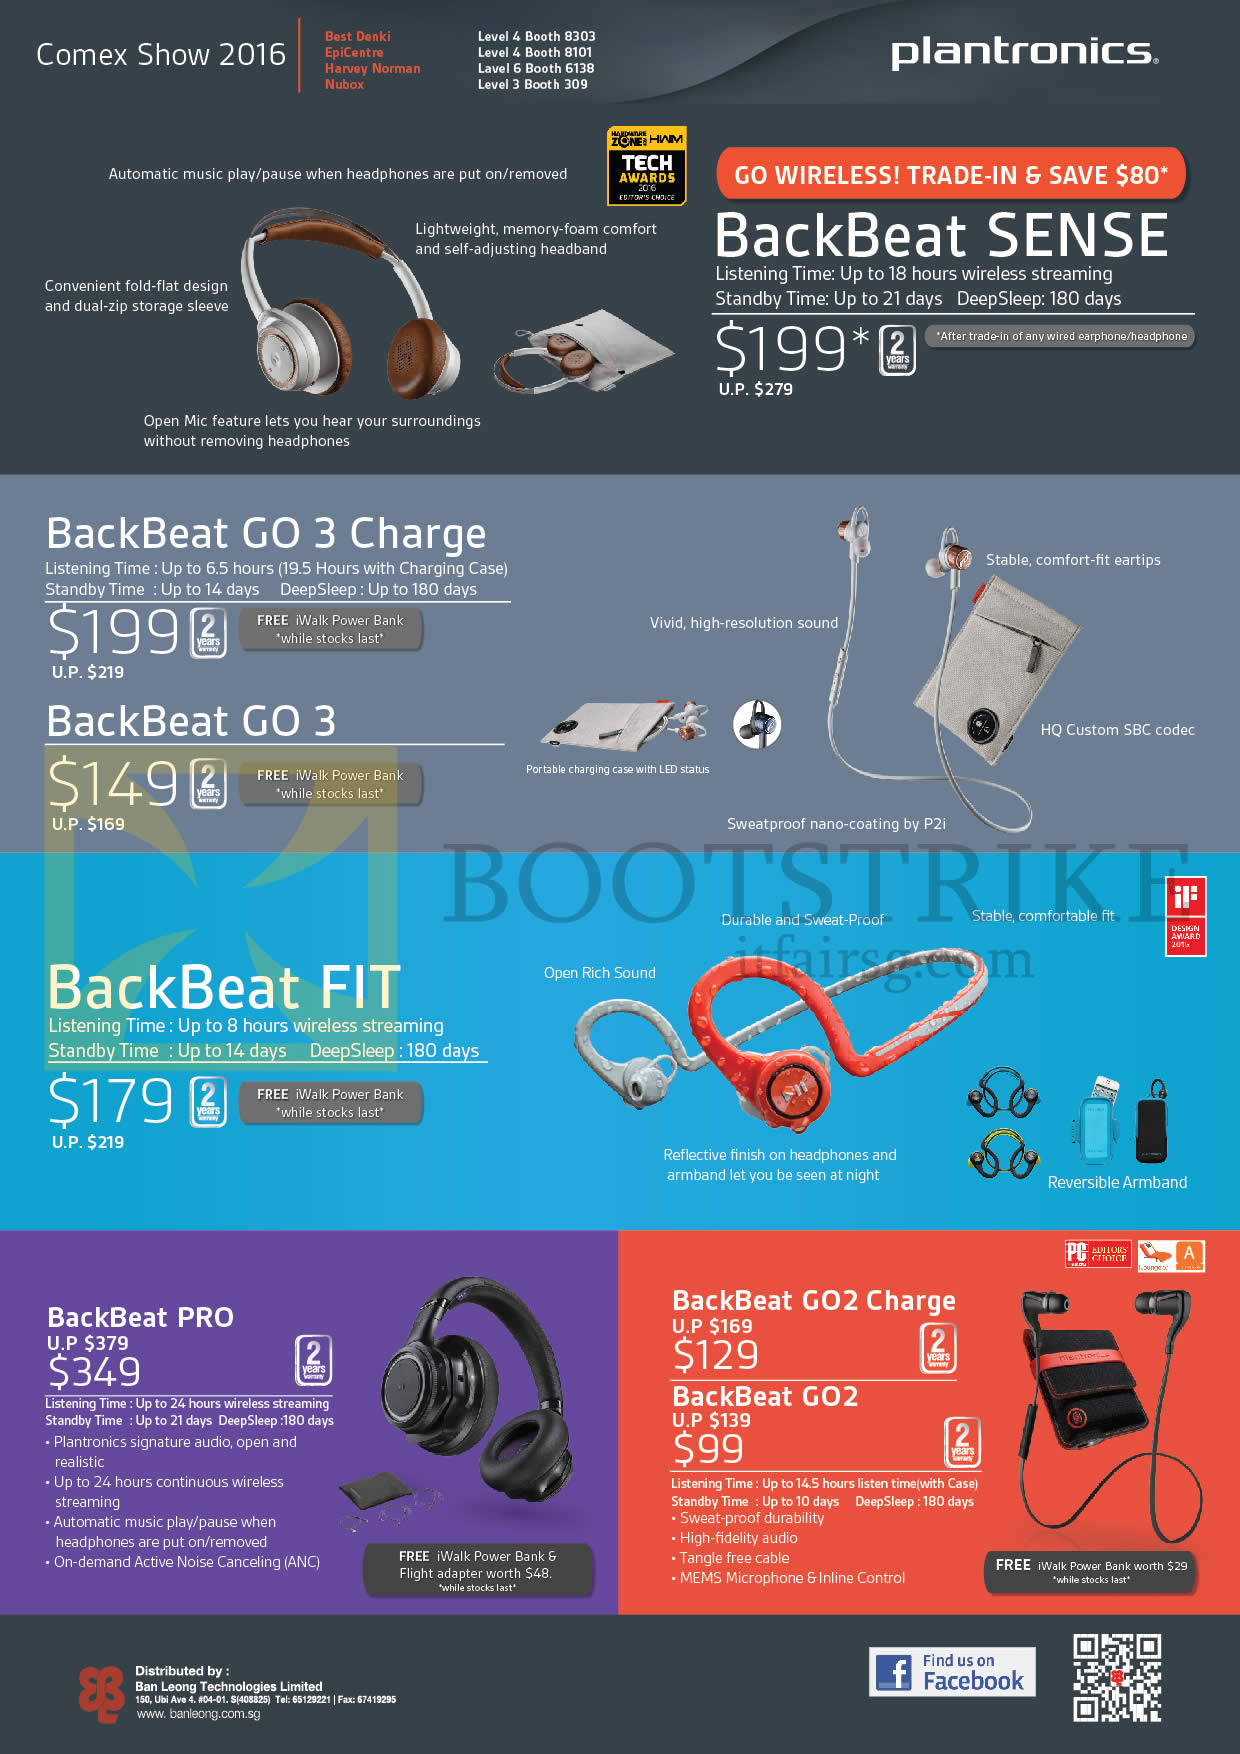 COMEX 2016 price list image brochure of Plantronics Headphones, Earphones, BackBeat SENSE, Go 3 Charge, FIT, PRO, Go2 Charge, Go2